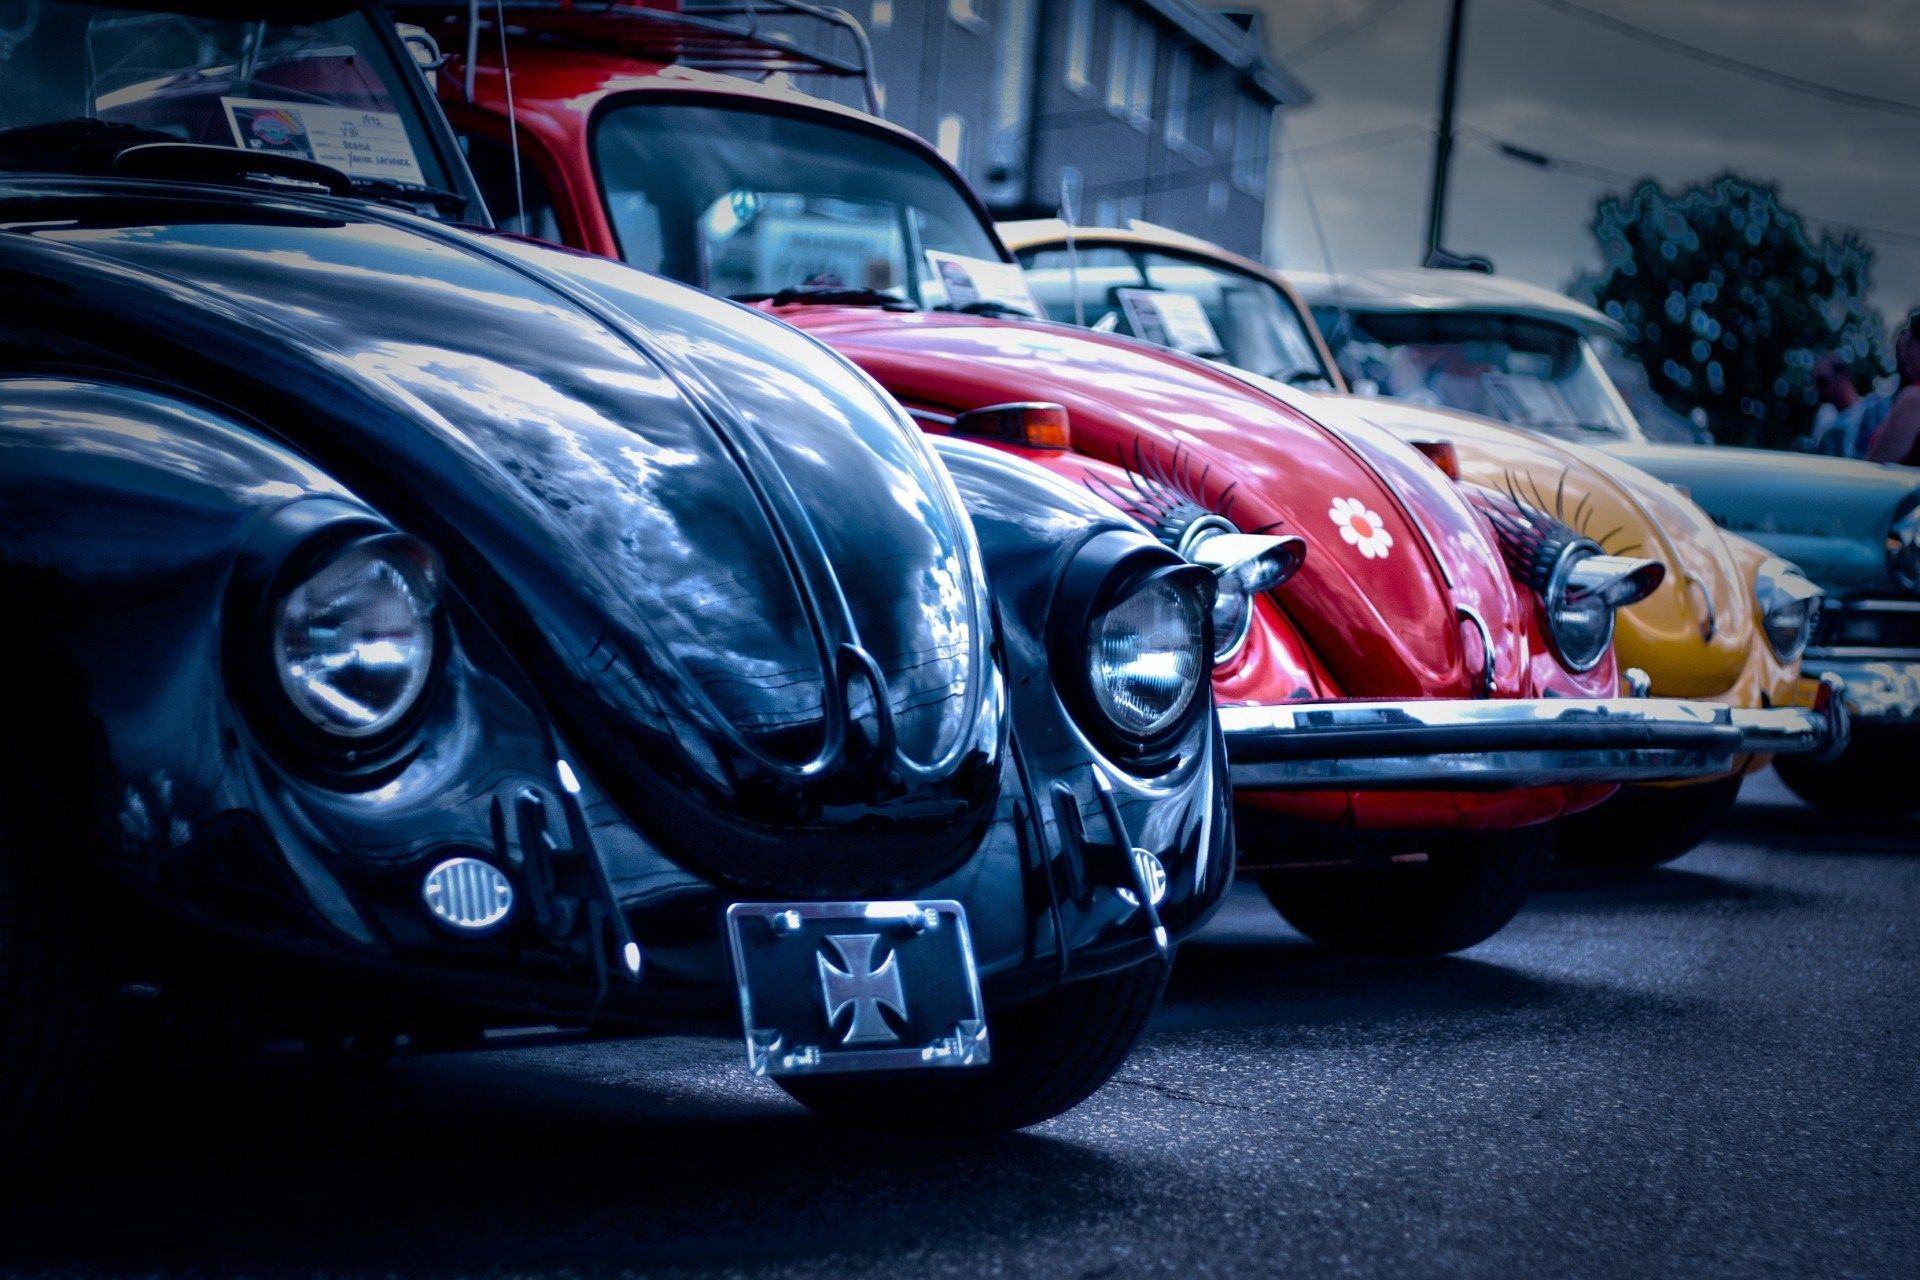 VW Beetle Wallpaper HD. Car wallpaper, Volkswagen, Best classic cars